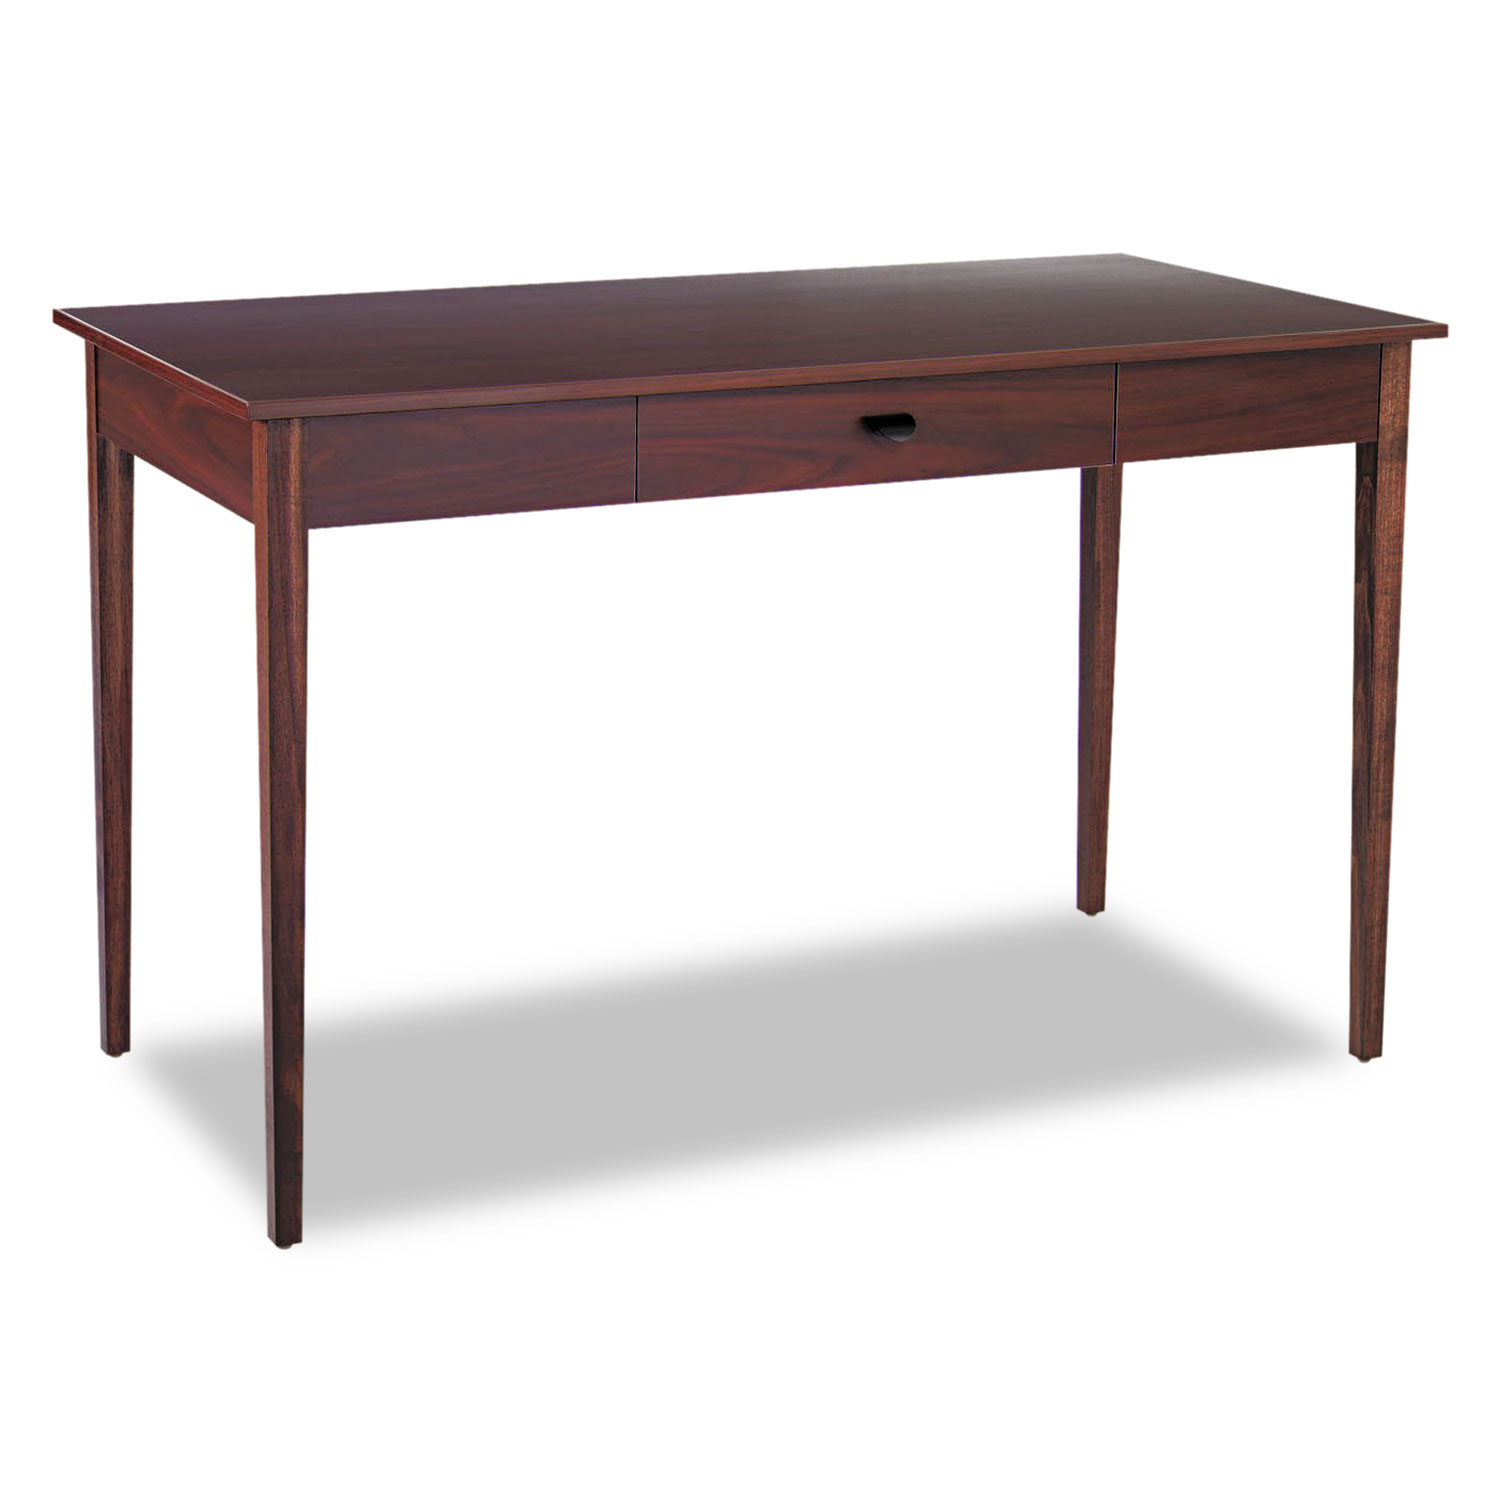  Safco 9446MH Apres Table Desk, 48w x 24d x 30h, Mahogany (SAF9446MH) 